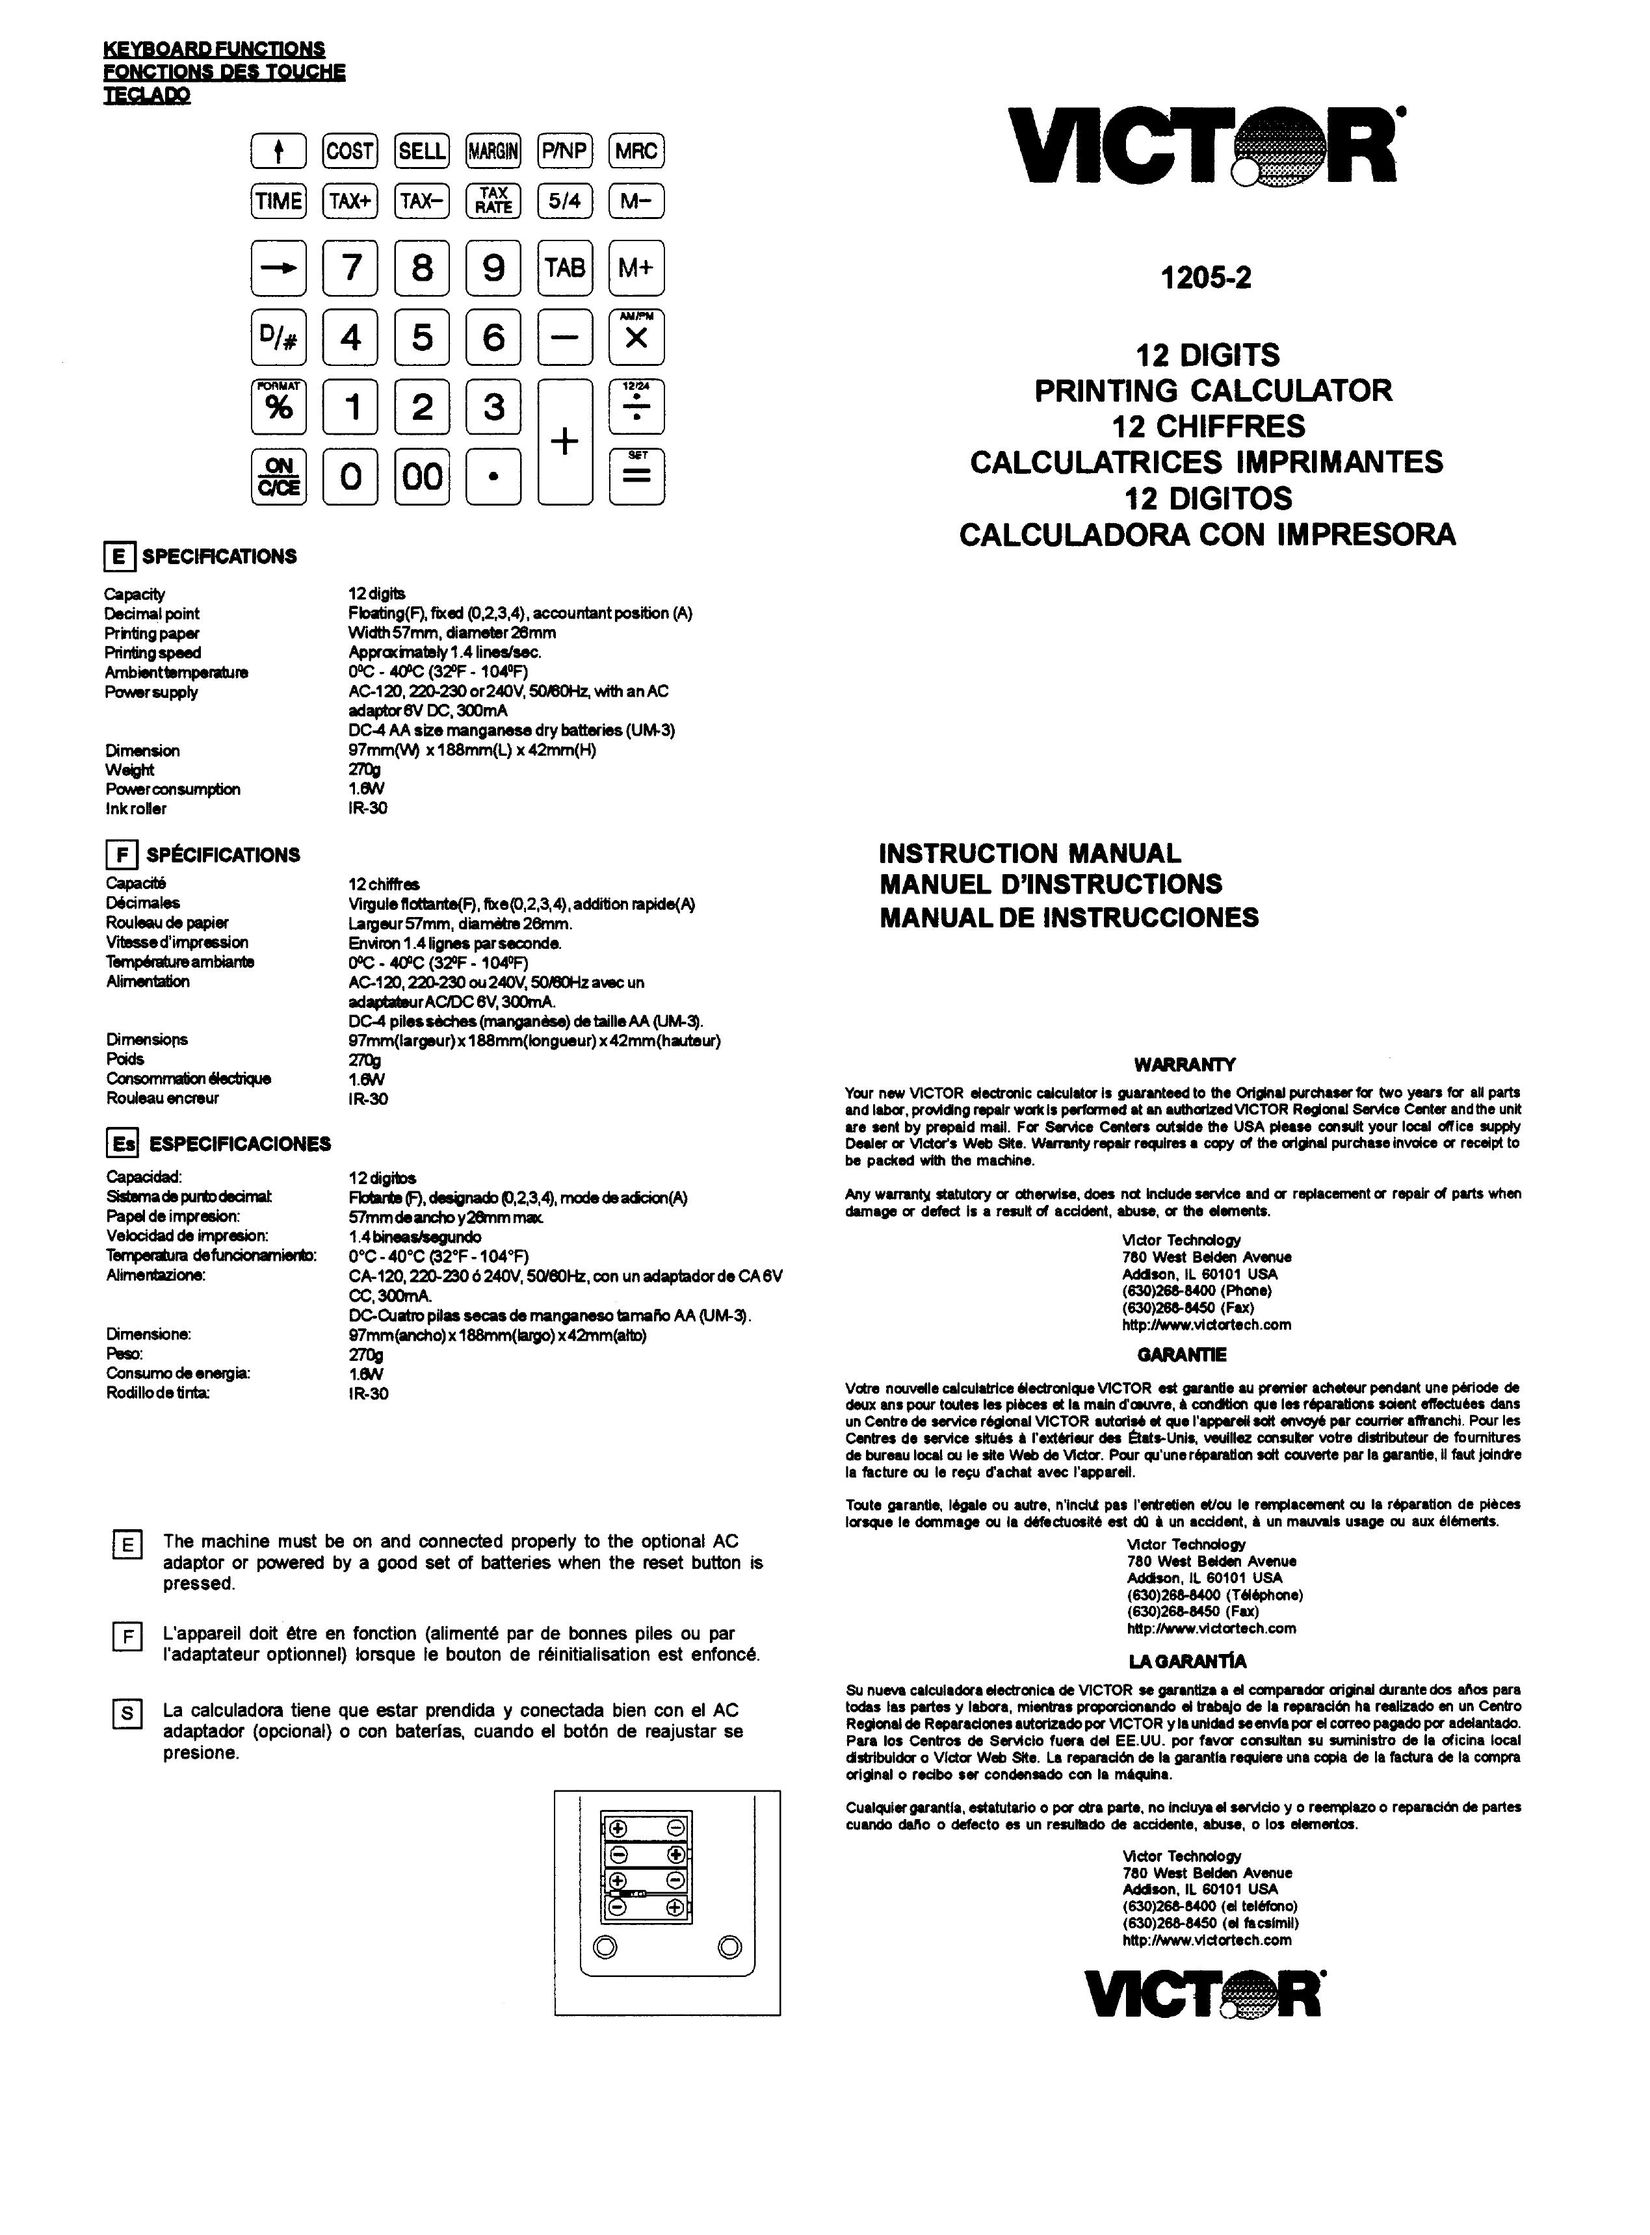 Victor 1205-2 Calculator User Manual